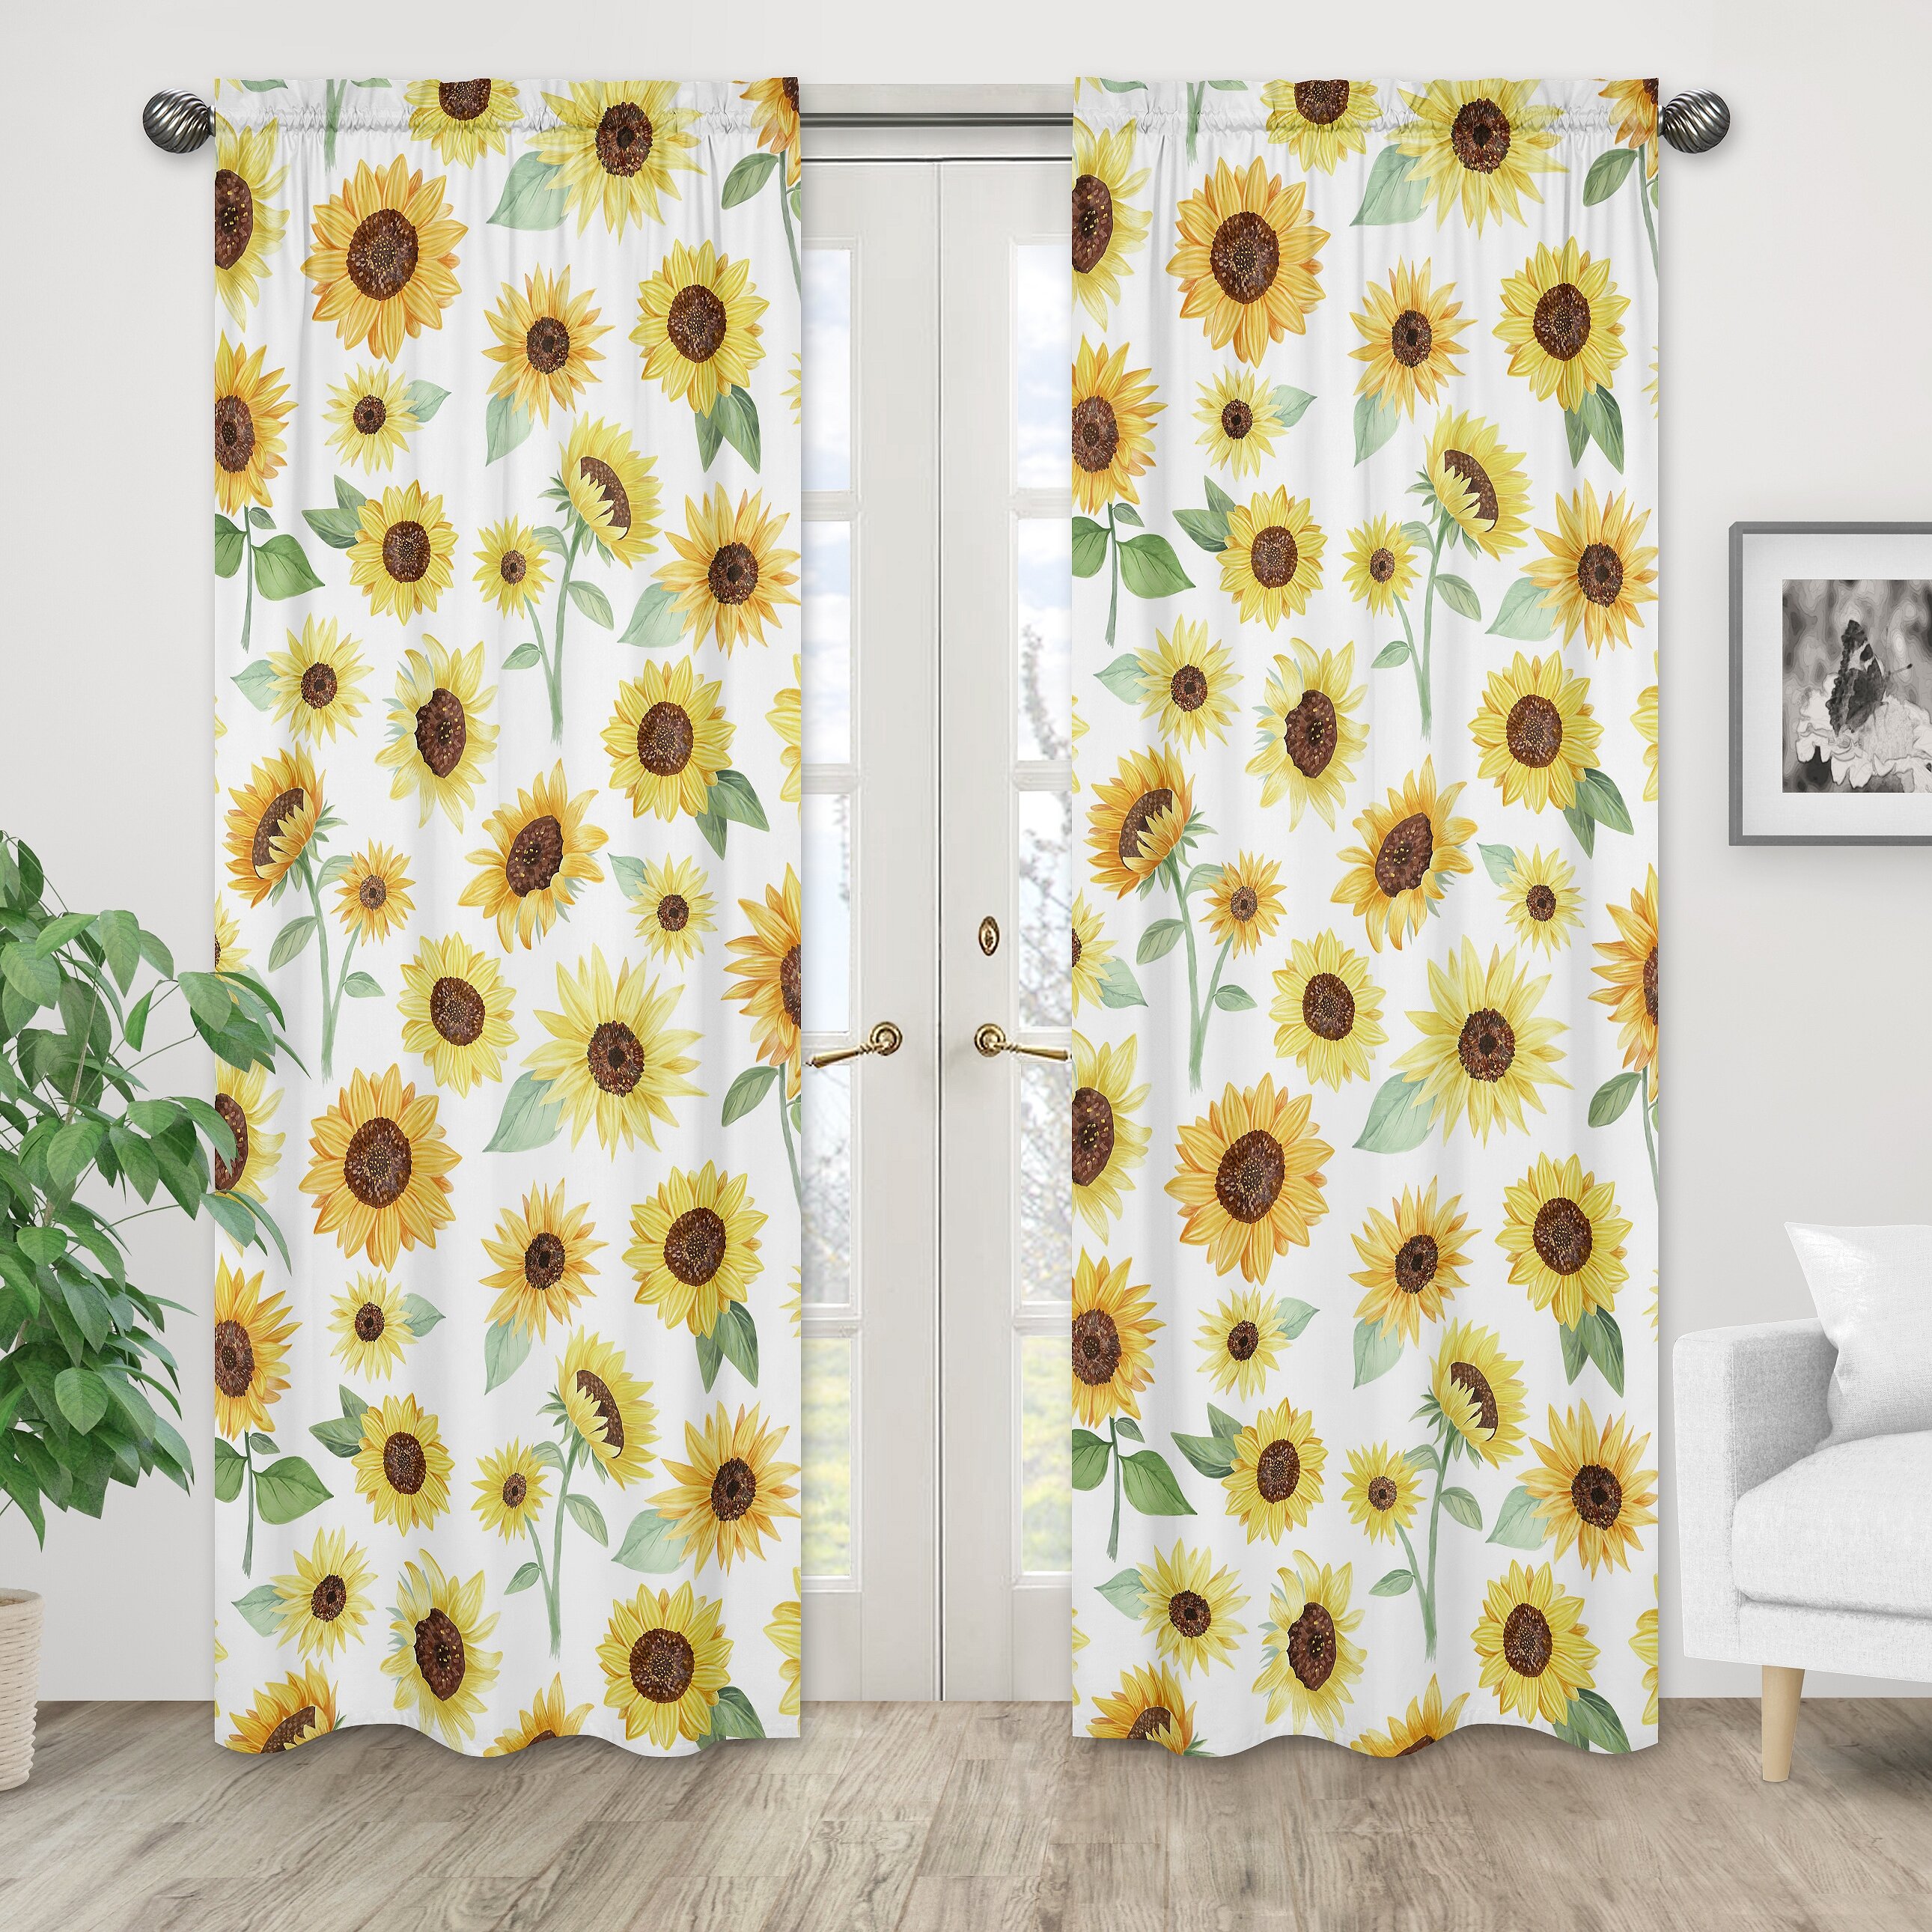 Sweet Jojo Designs Sunflower Collection Floral Semi Sheer Rod Pocket Curtain Panels Reviews Wayfair